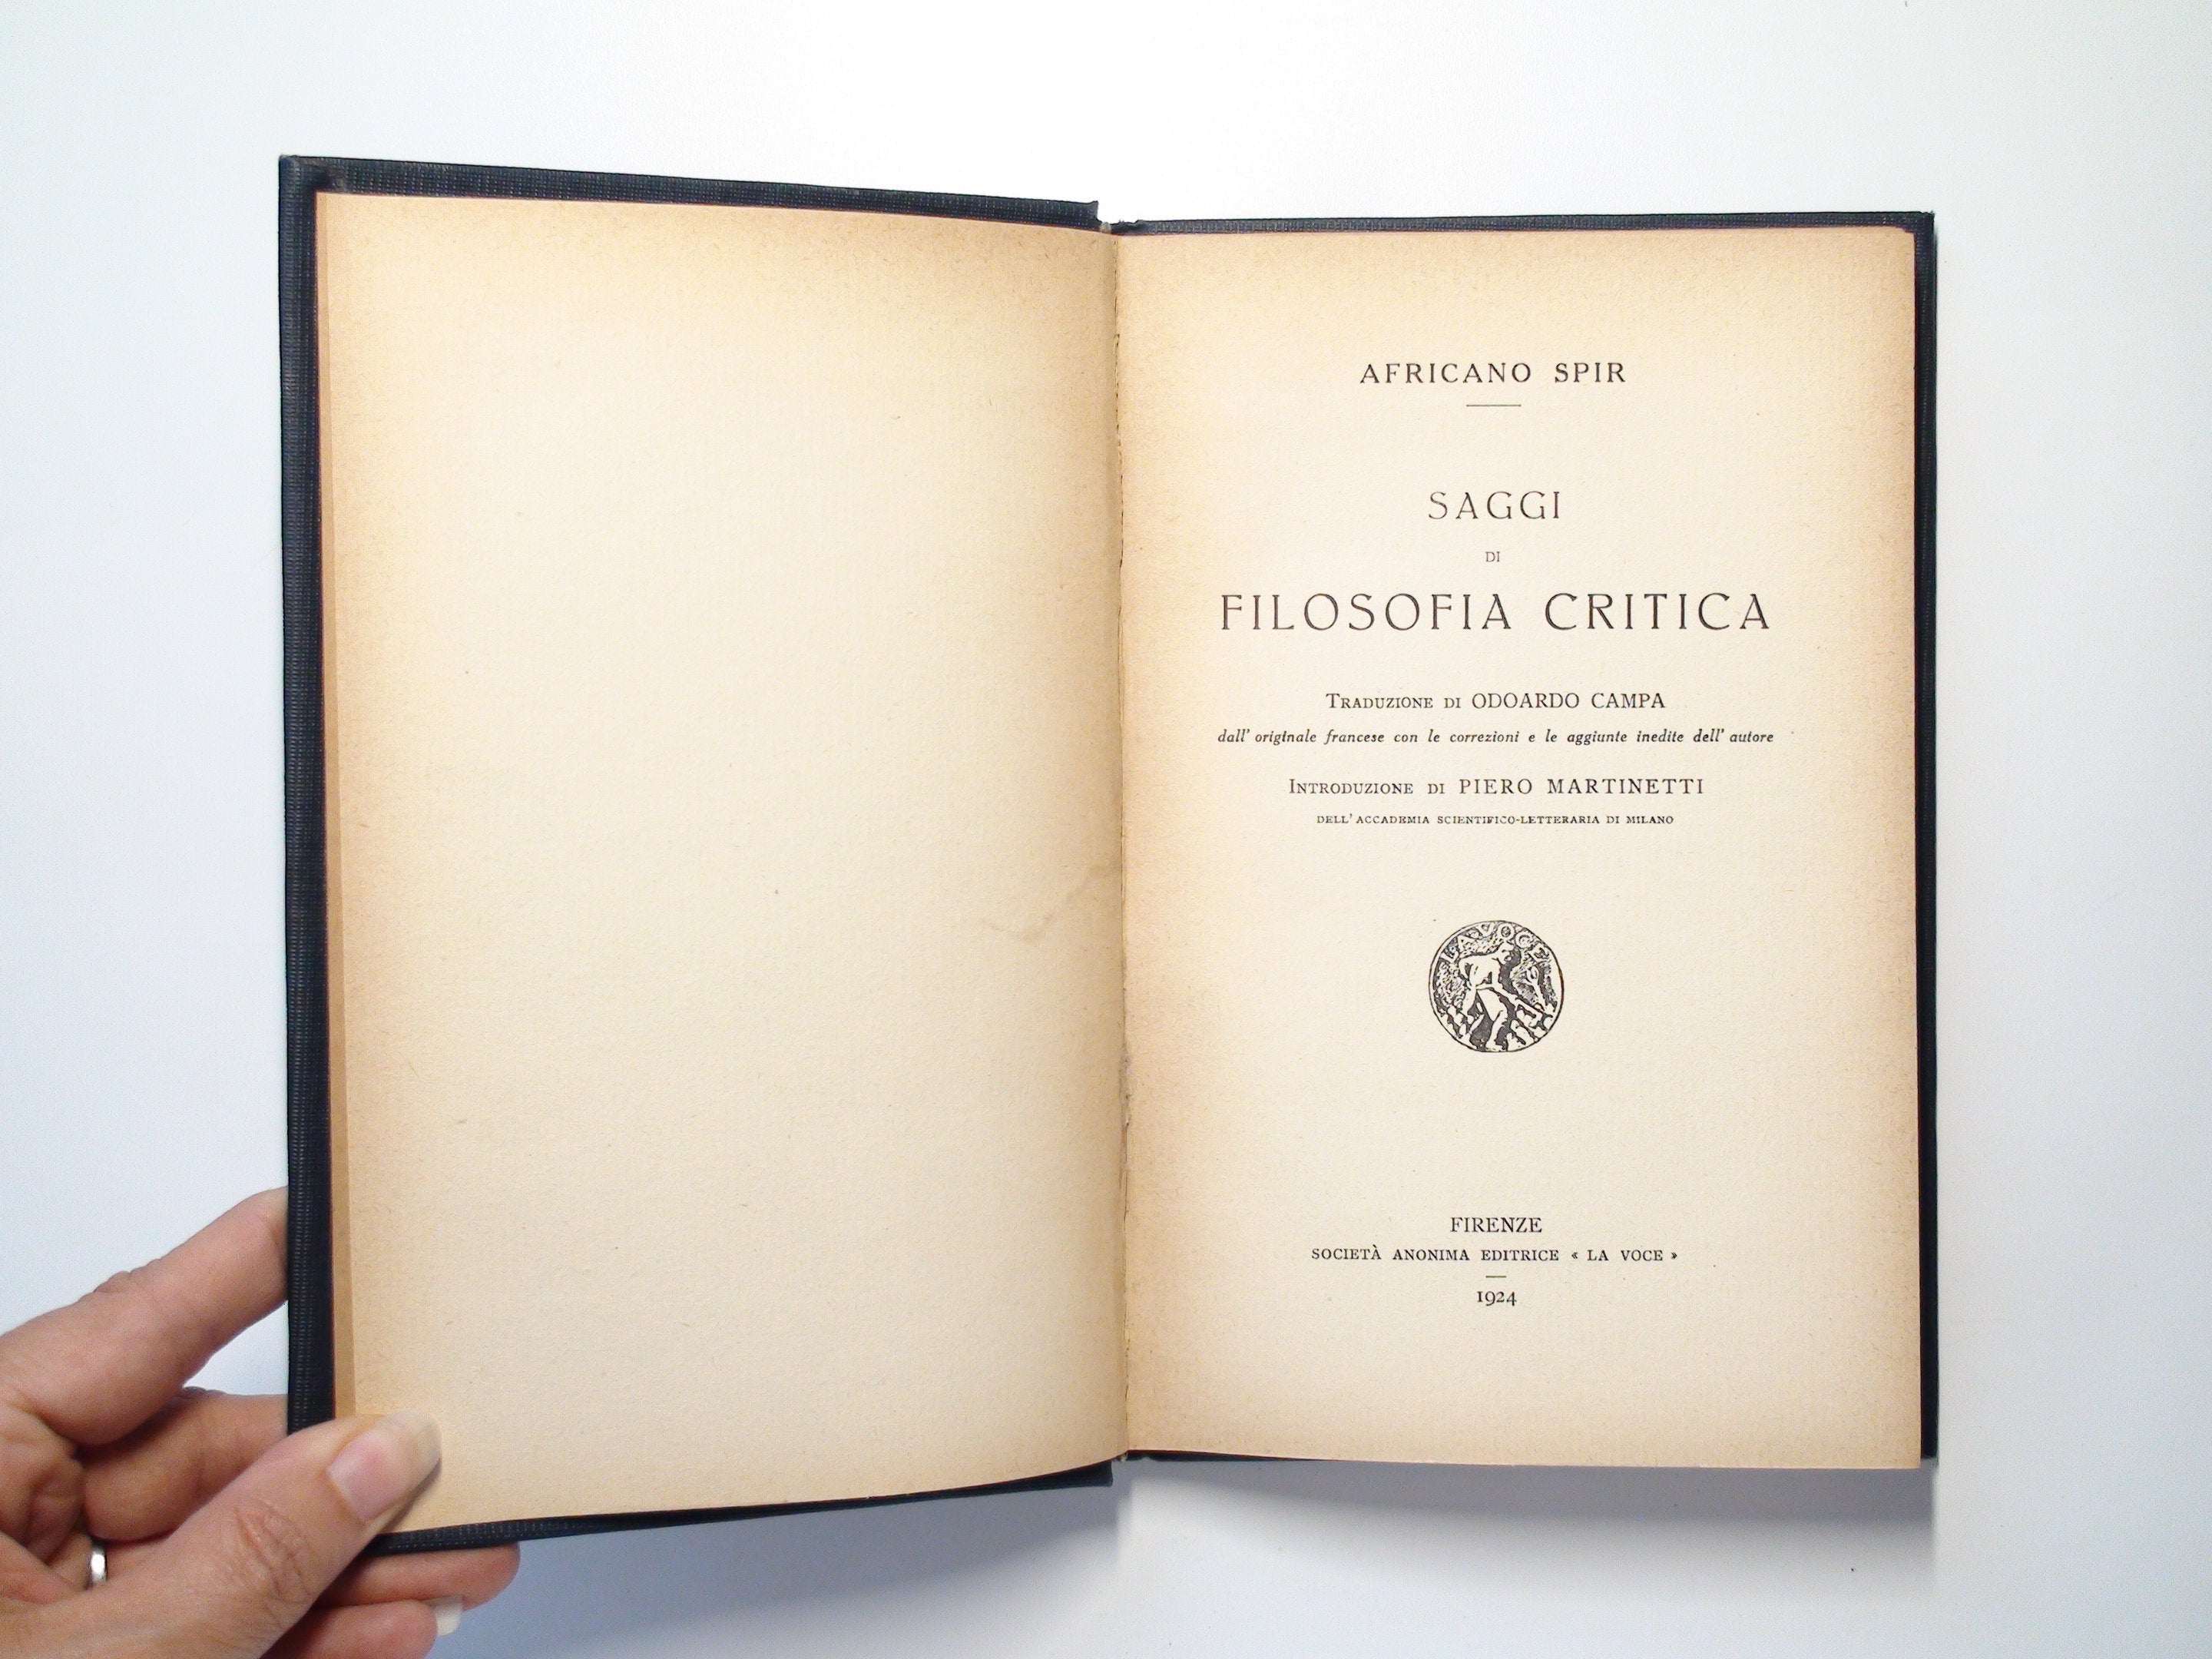 Saggi di Filosofia Critica, Africano Spir, Italian Language, 1924